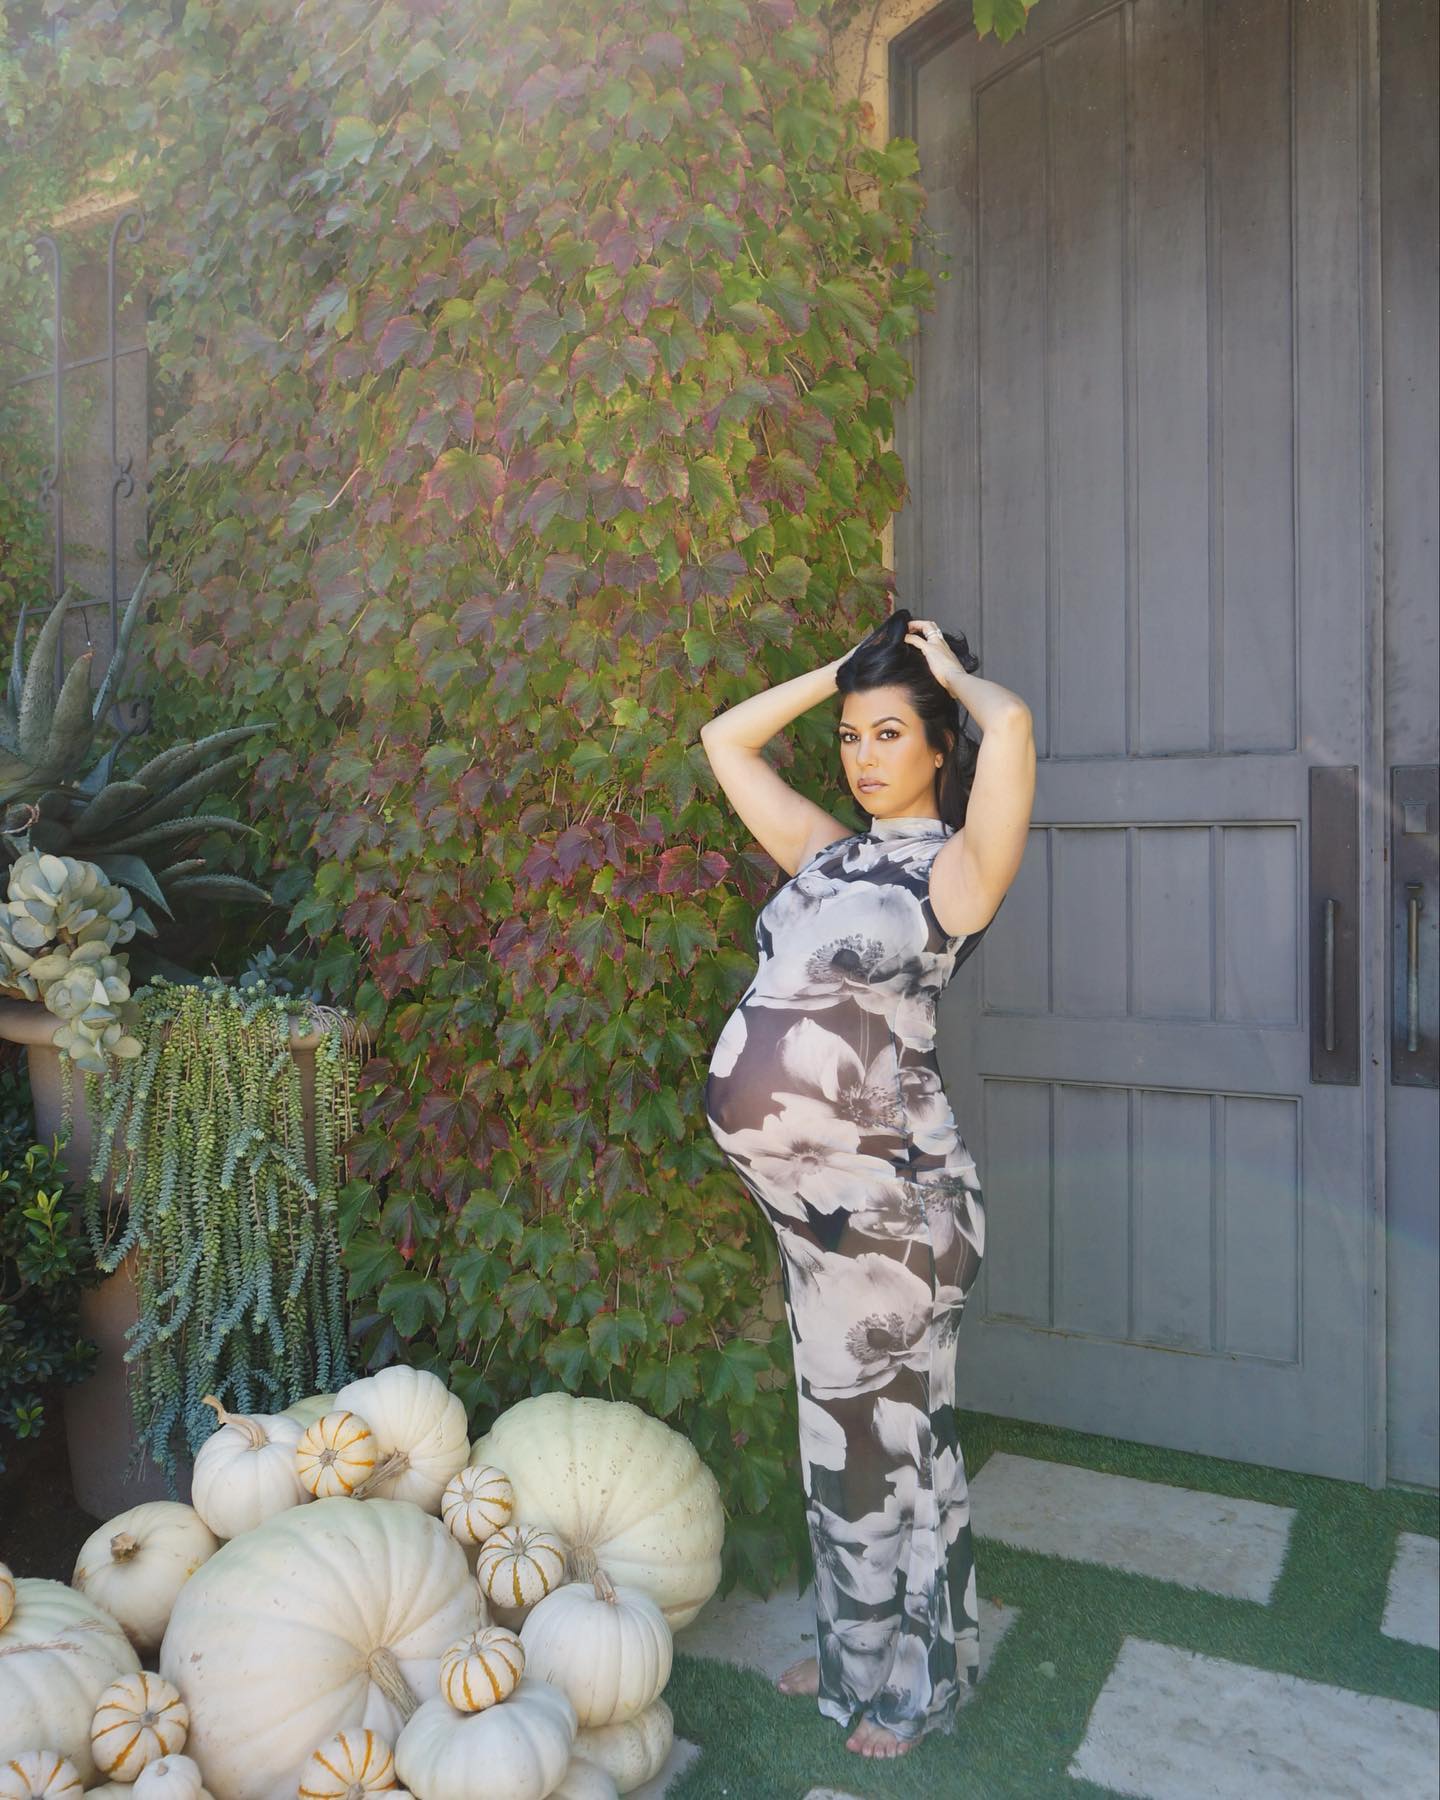 Kourtney Kardashian: Plant-Based Pregnancy Diet May Promote Prenatal Health